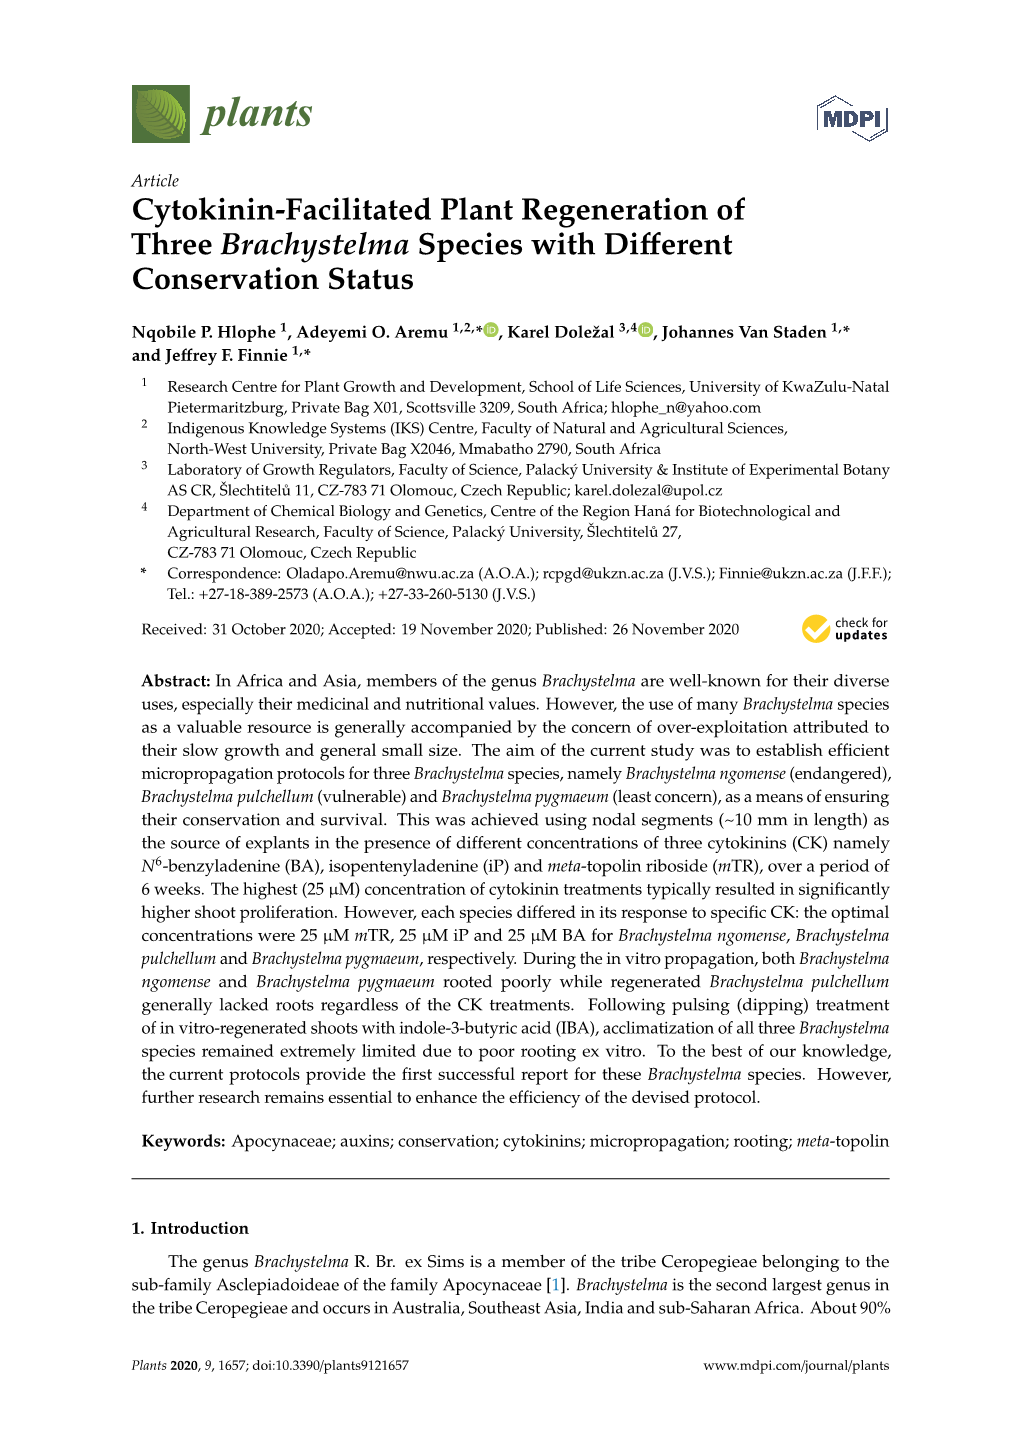 Cytokinin-Facilitated Plant Regeneration of Three Brachystelma Species with Different Conservation Status